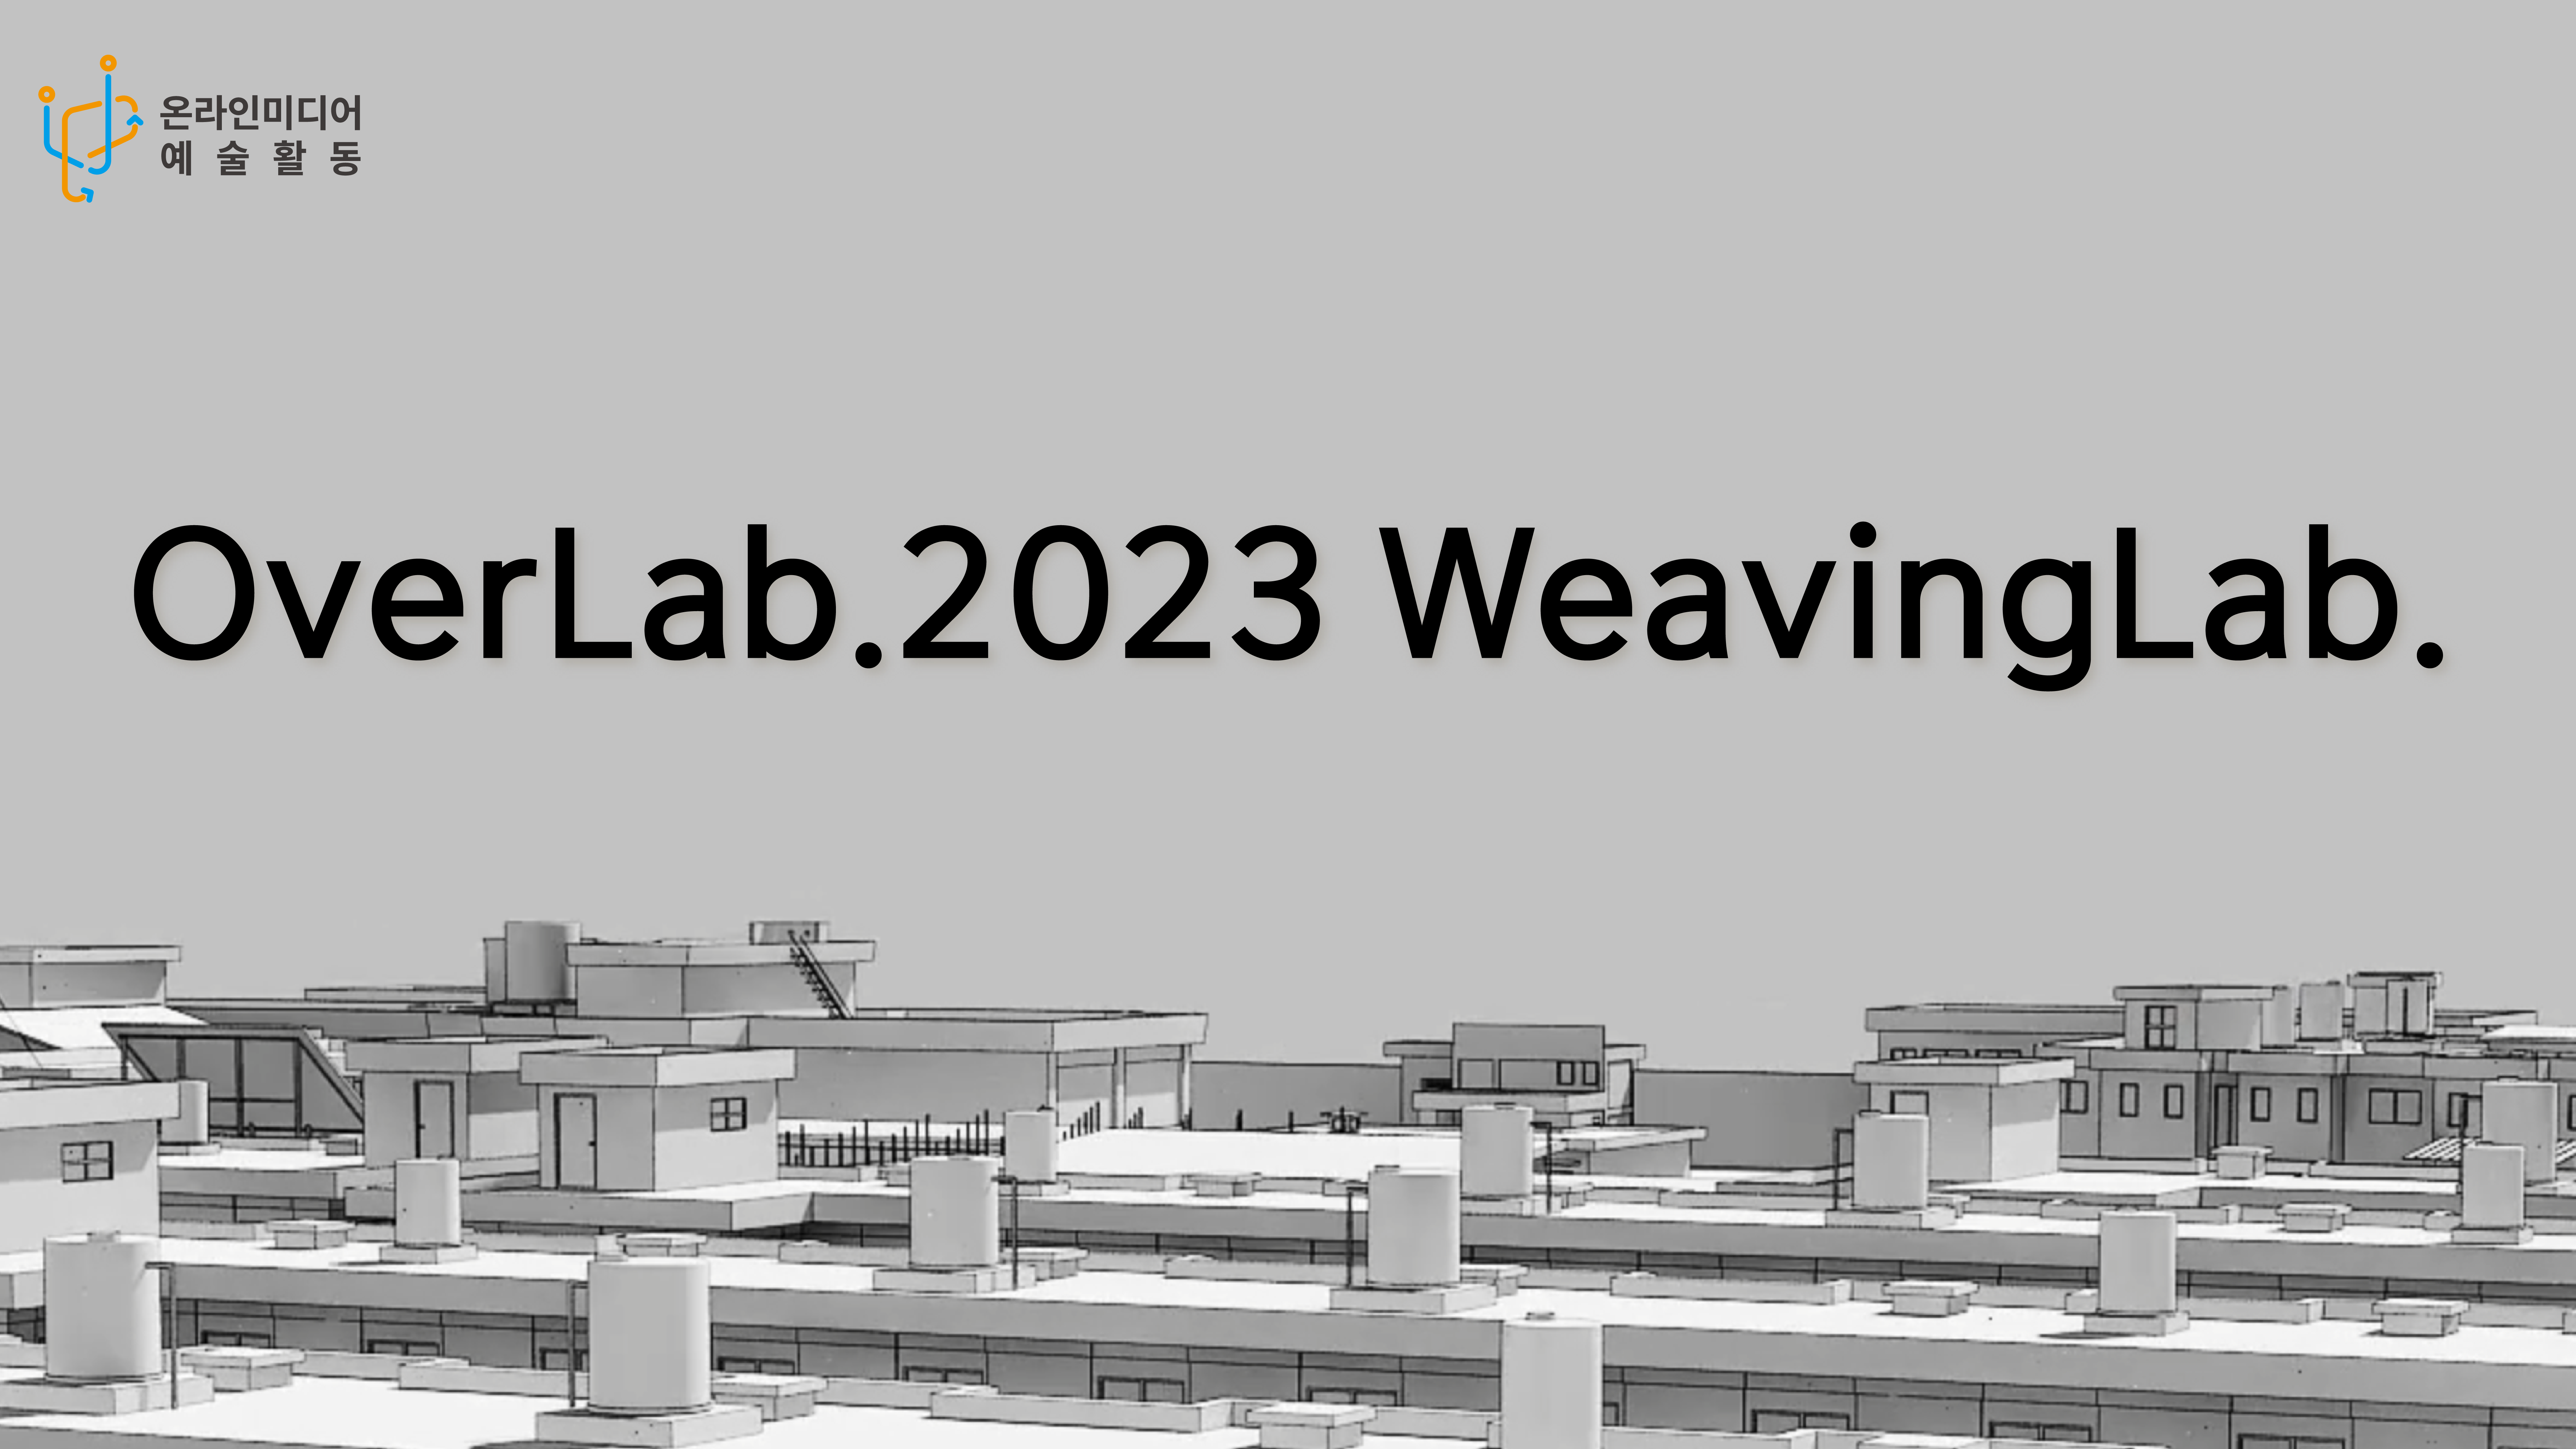 OverLab.2023 WeavingLab. 프로젝트 소개 영상